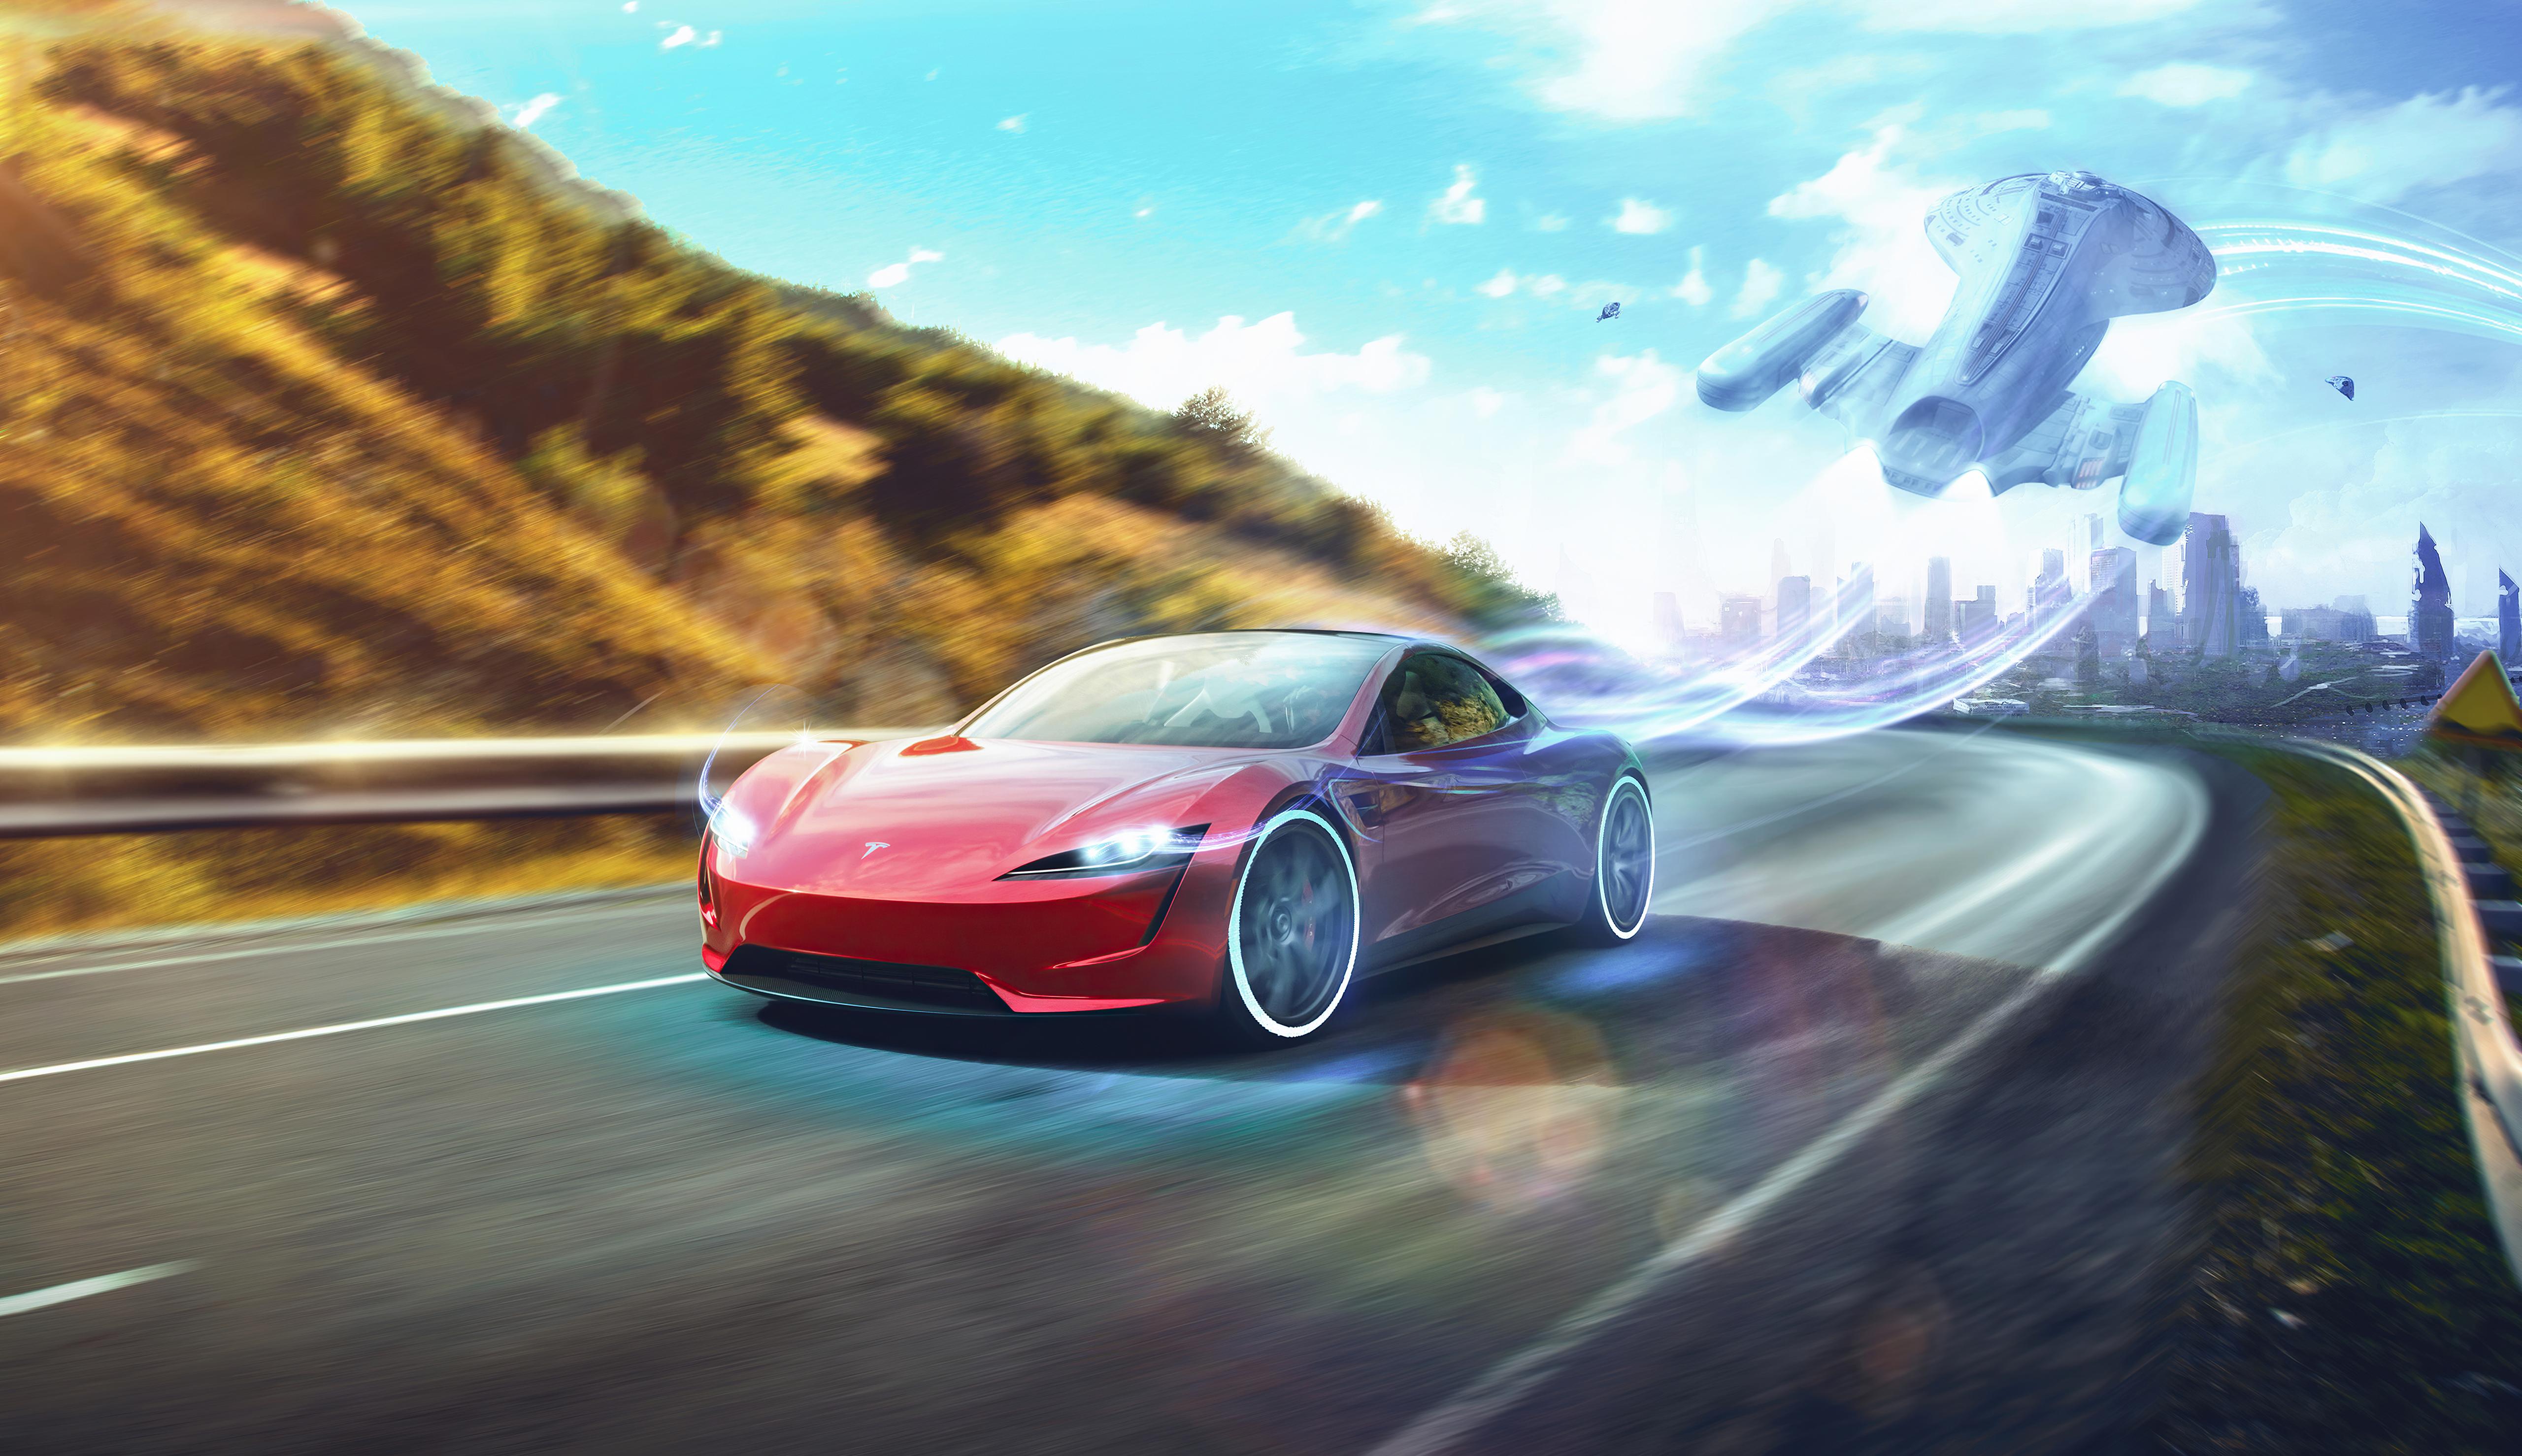  Tesla Roadster 5k WallpaperHD Cars Wallpapers4k Wallpapers